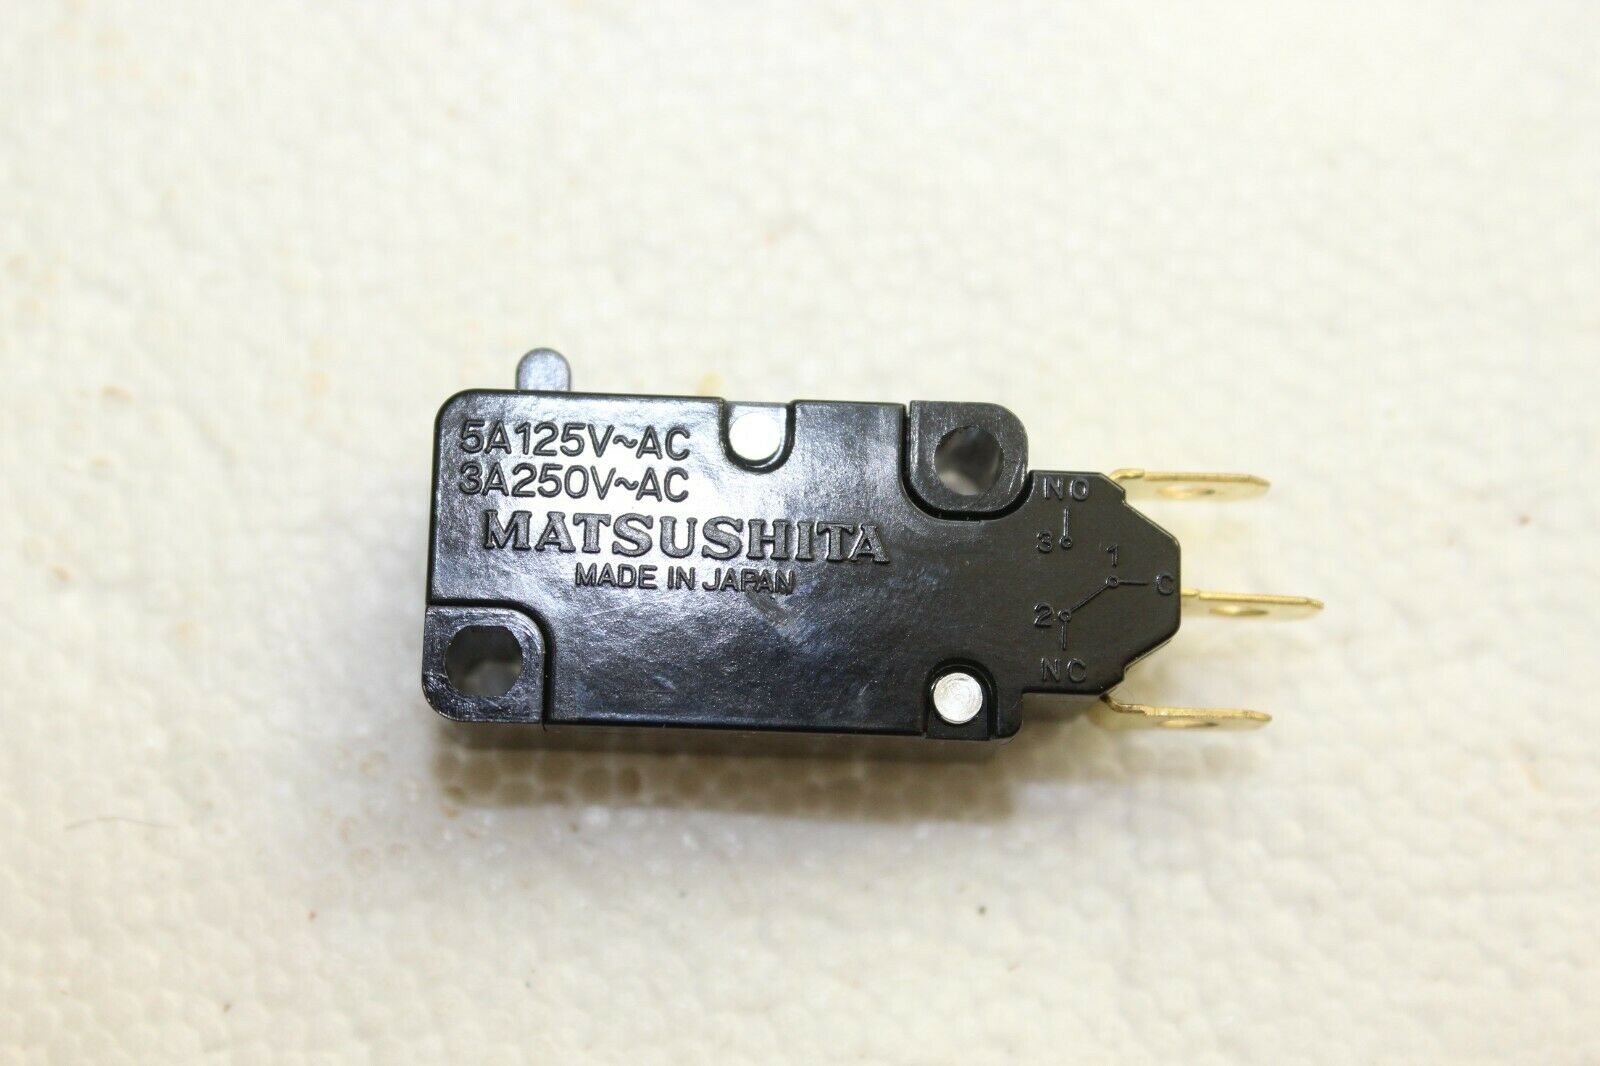 Matsushita Electronics Gv Miniature Switch - 5a 125v-ac / 3a 250v-ac - Ah44009